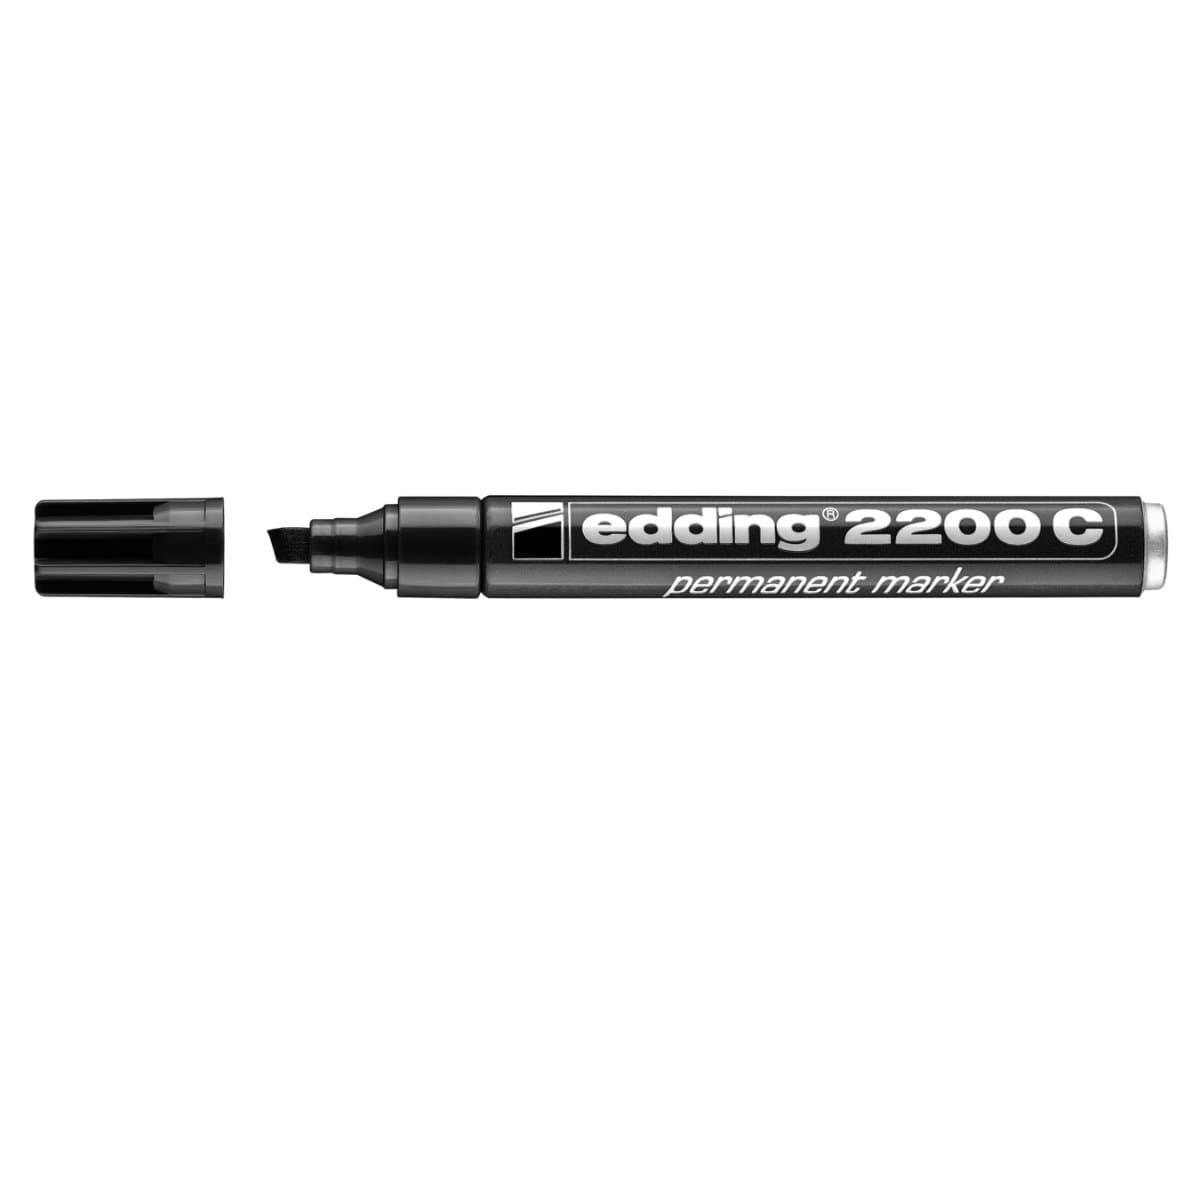 edding 2200C Permanent Marker, 1-5mm Chisel Tip, Black